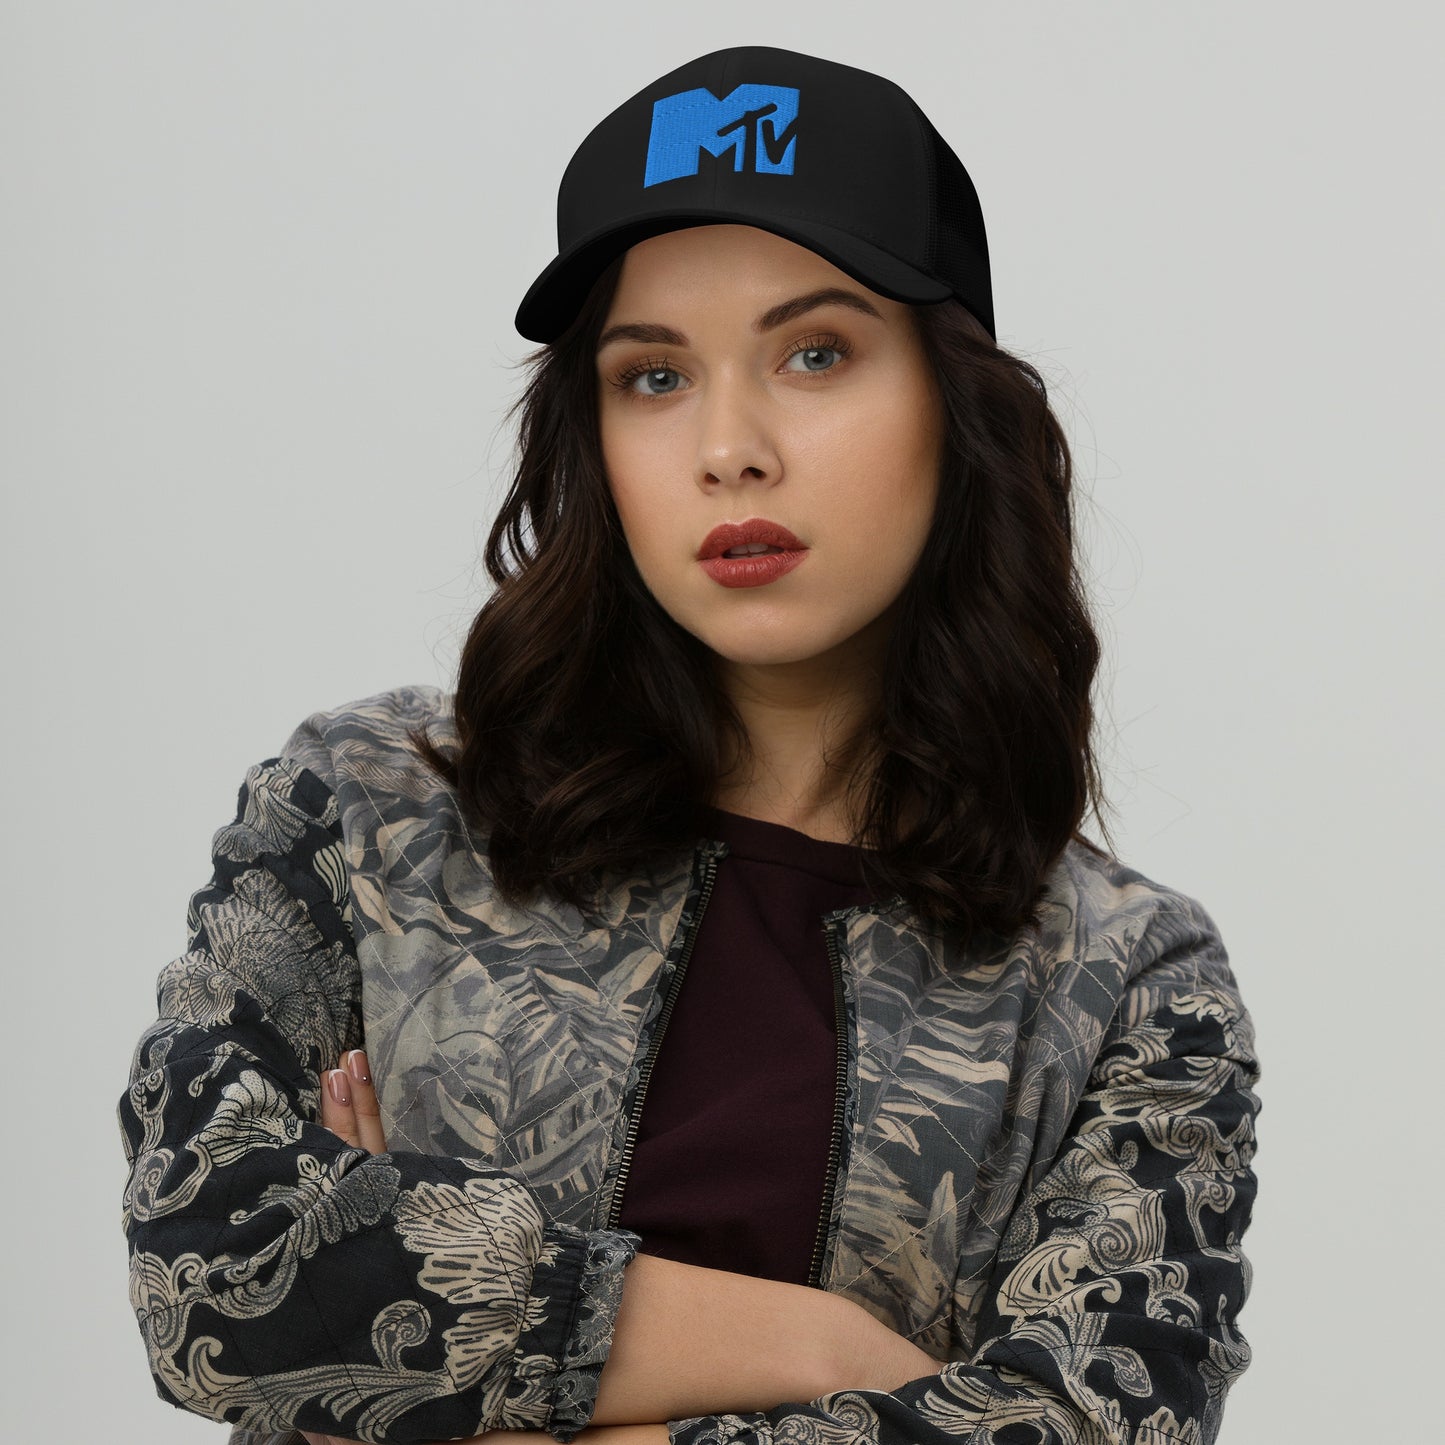 MTV Trucker Hat